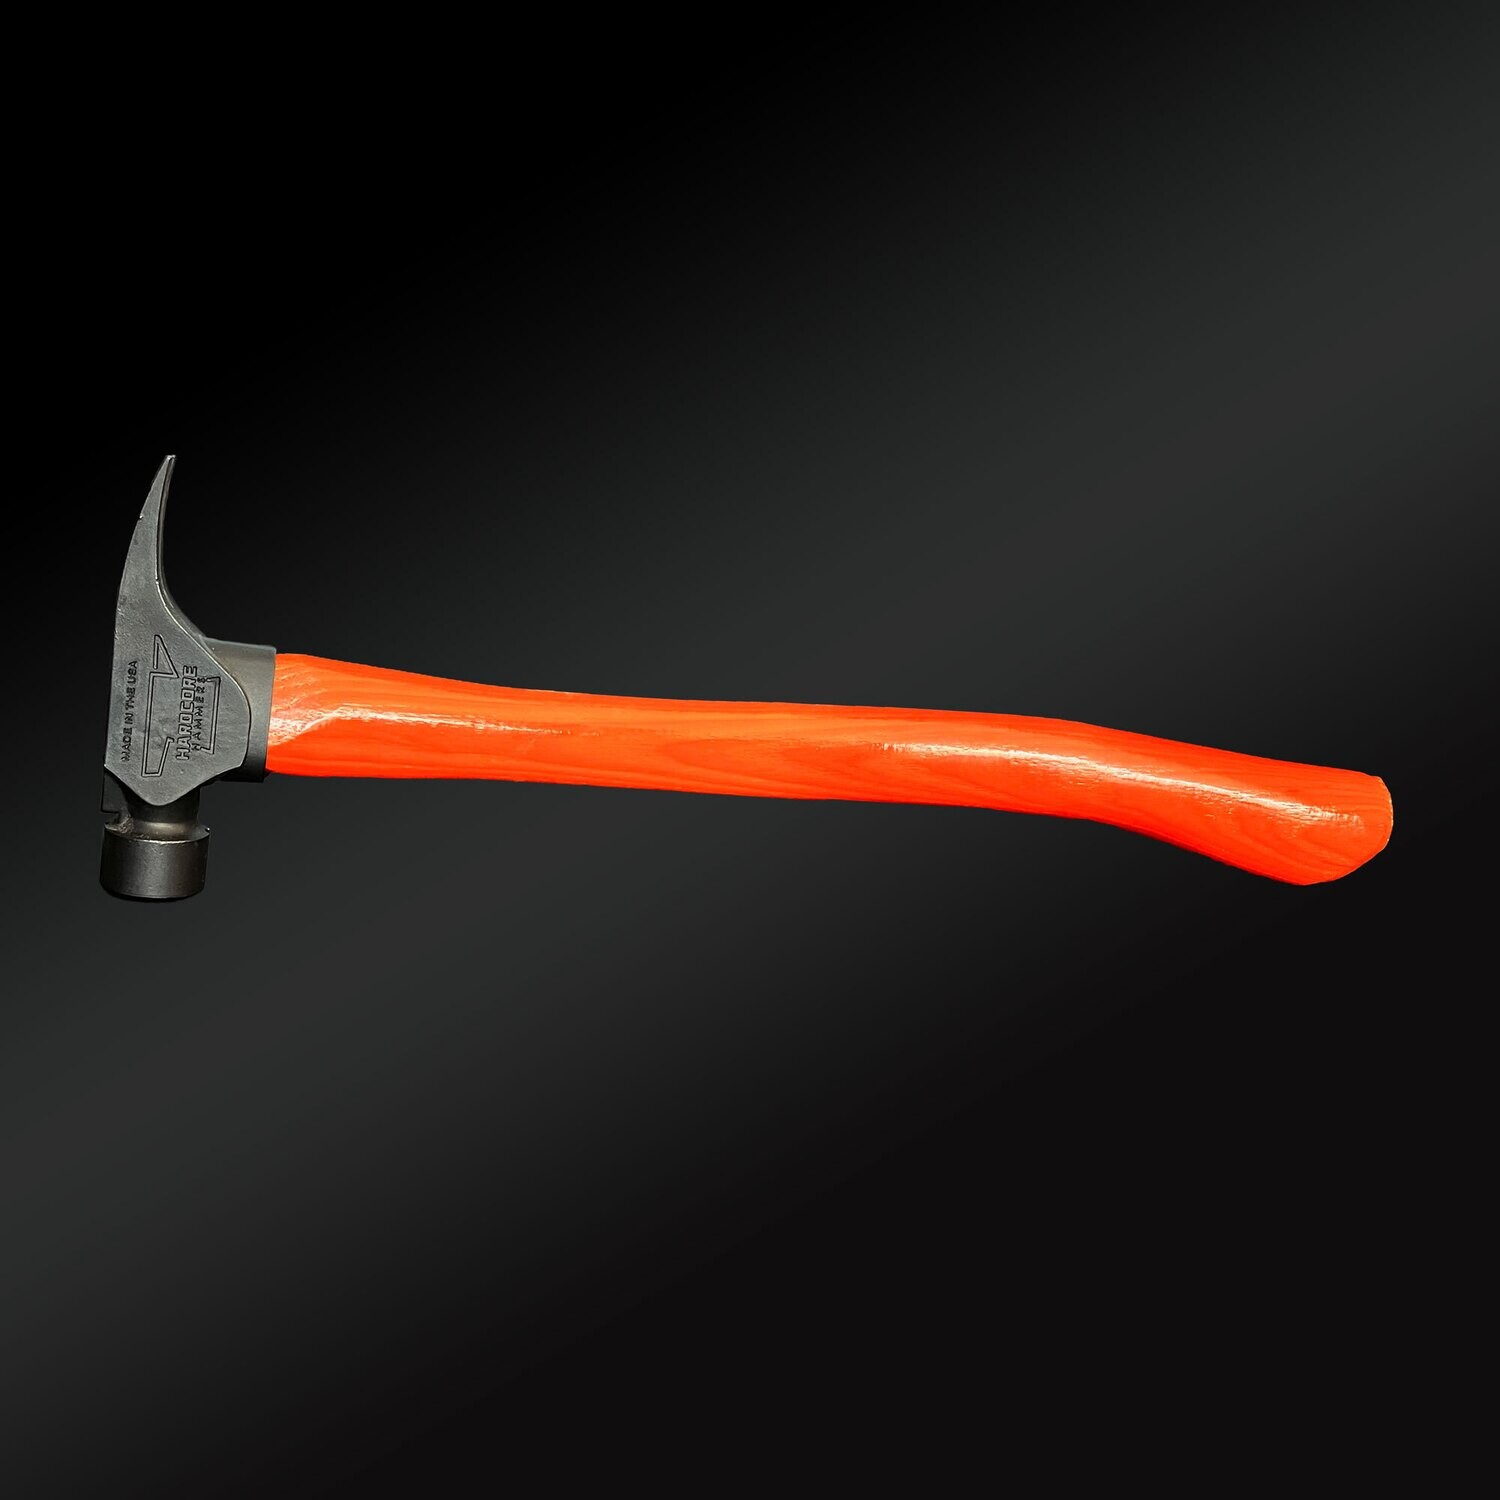 Blackened Full Orange Original HARDCORE Hammer 2.0